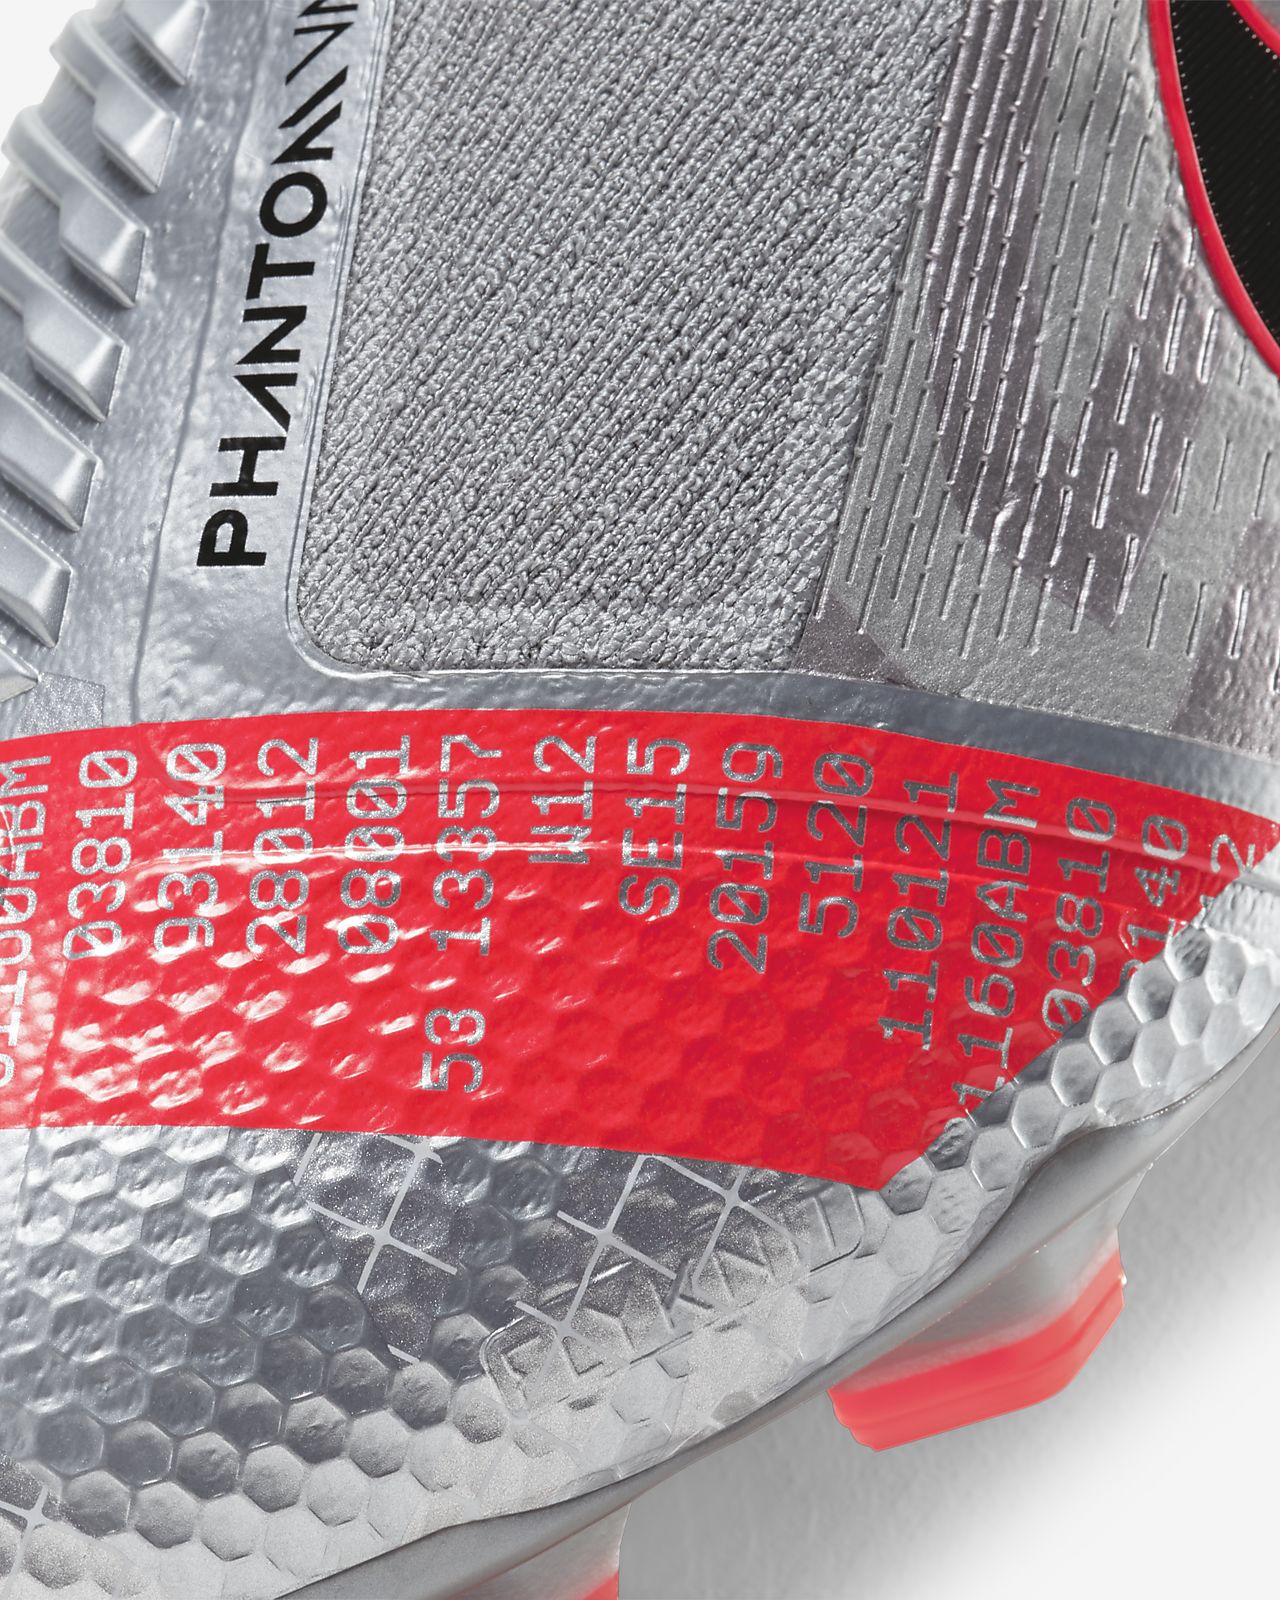 Nike Phantom Venom Pro FG Firm Ground Soccer Shoe 92316D